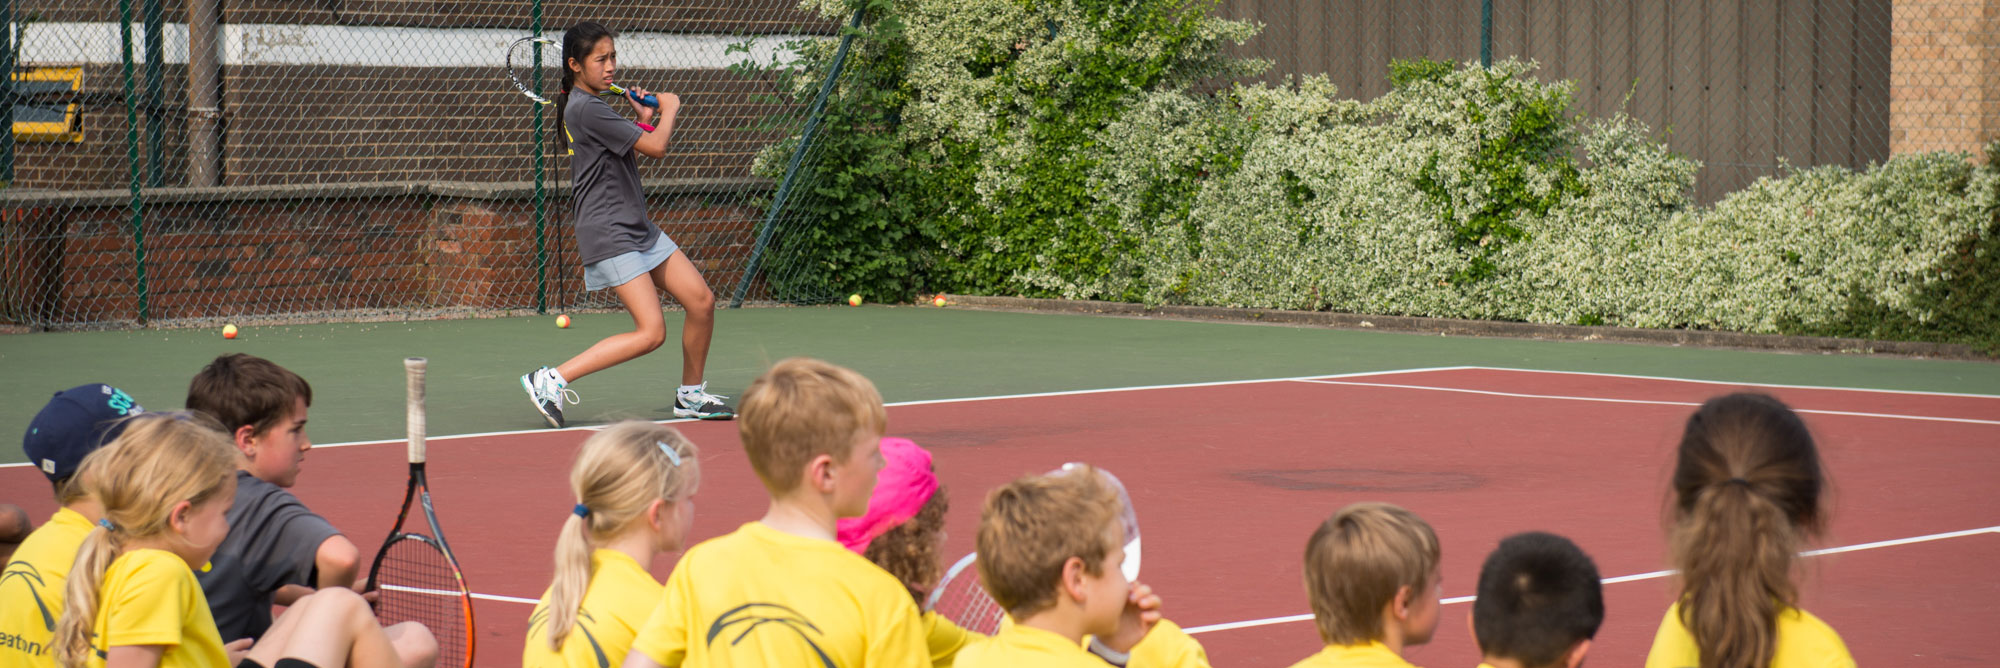 Tennis Lessons for Children